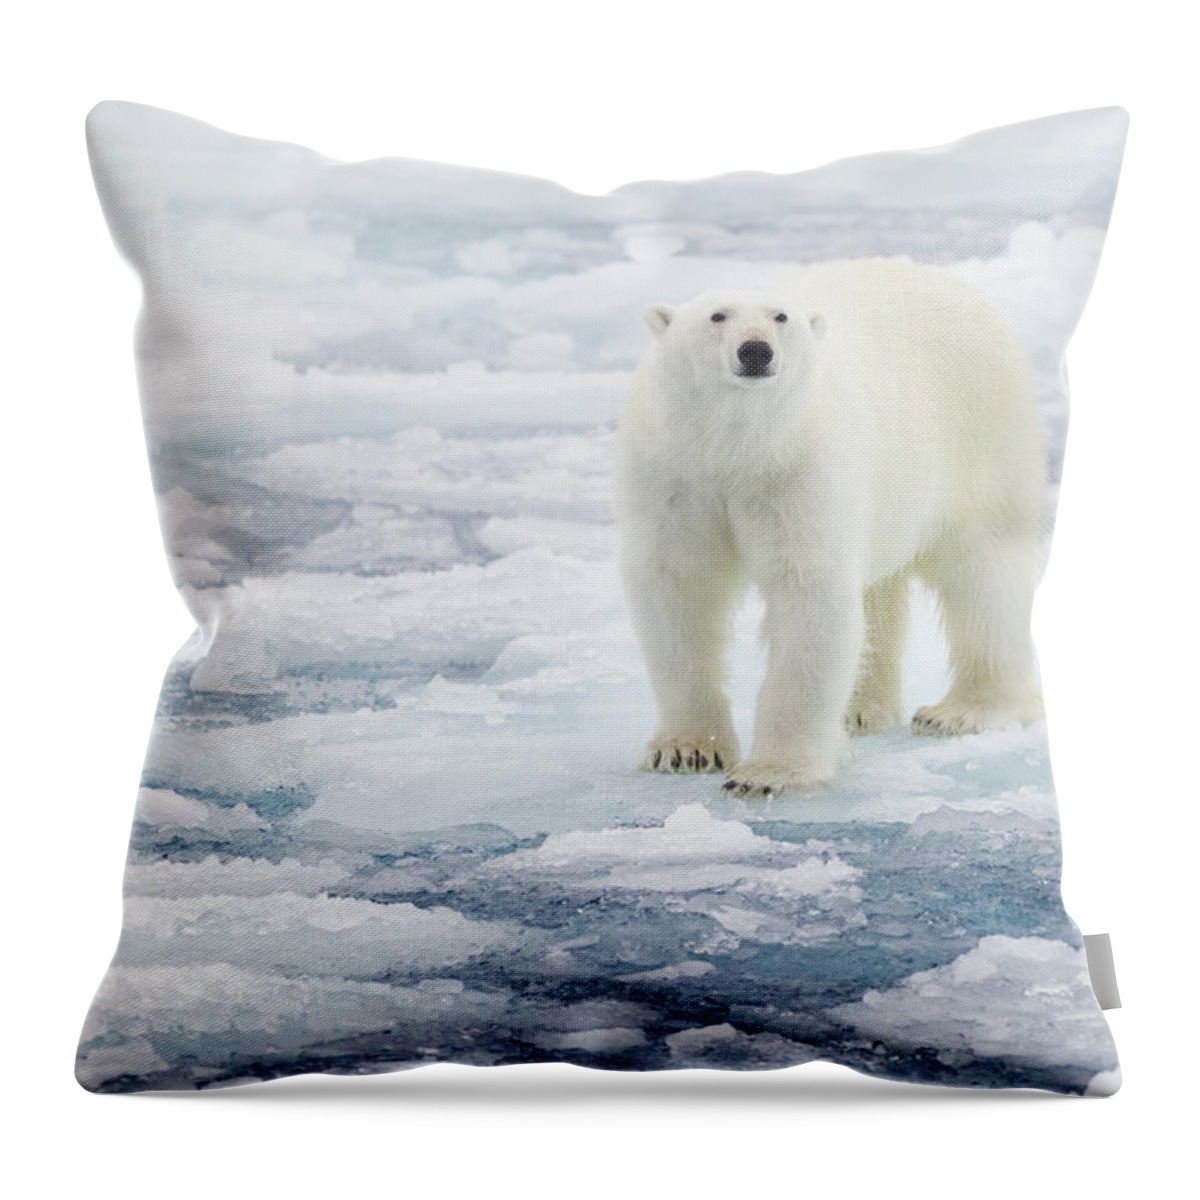 Vertebrate Throw Pillow featuring the photograph Polar Bear by Kencanning